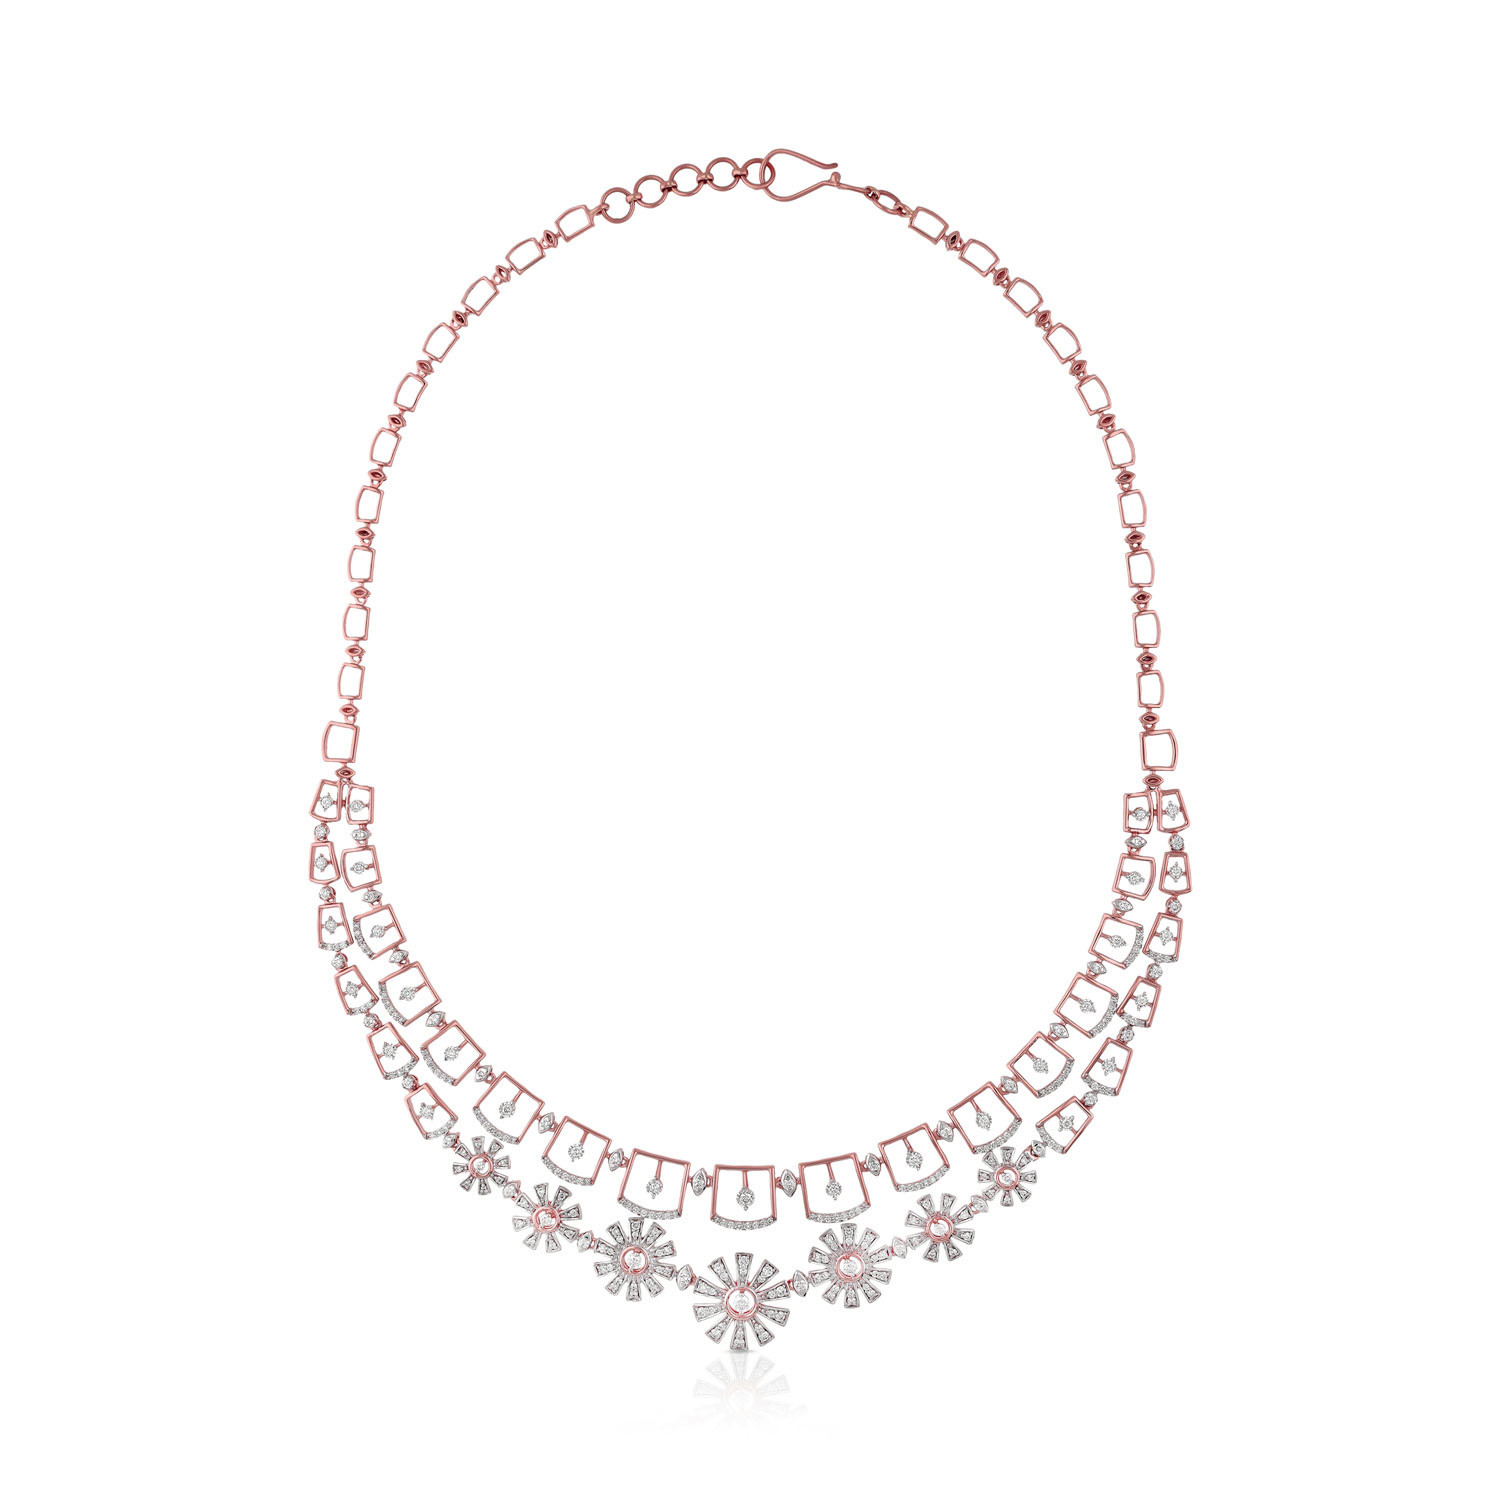 Pin by Darshini parmar on Diamond necklace | Jewelry design patterns, Art  jewelry design, Diamond jewelry designs